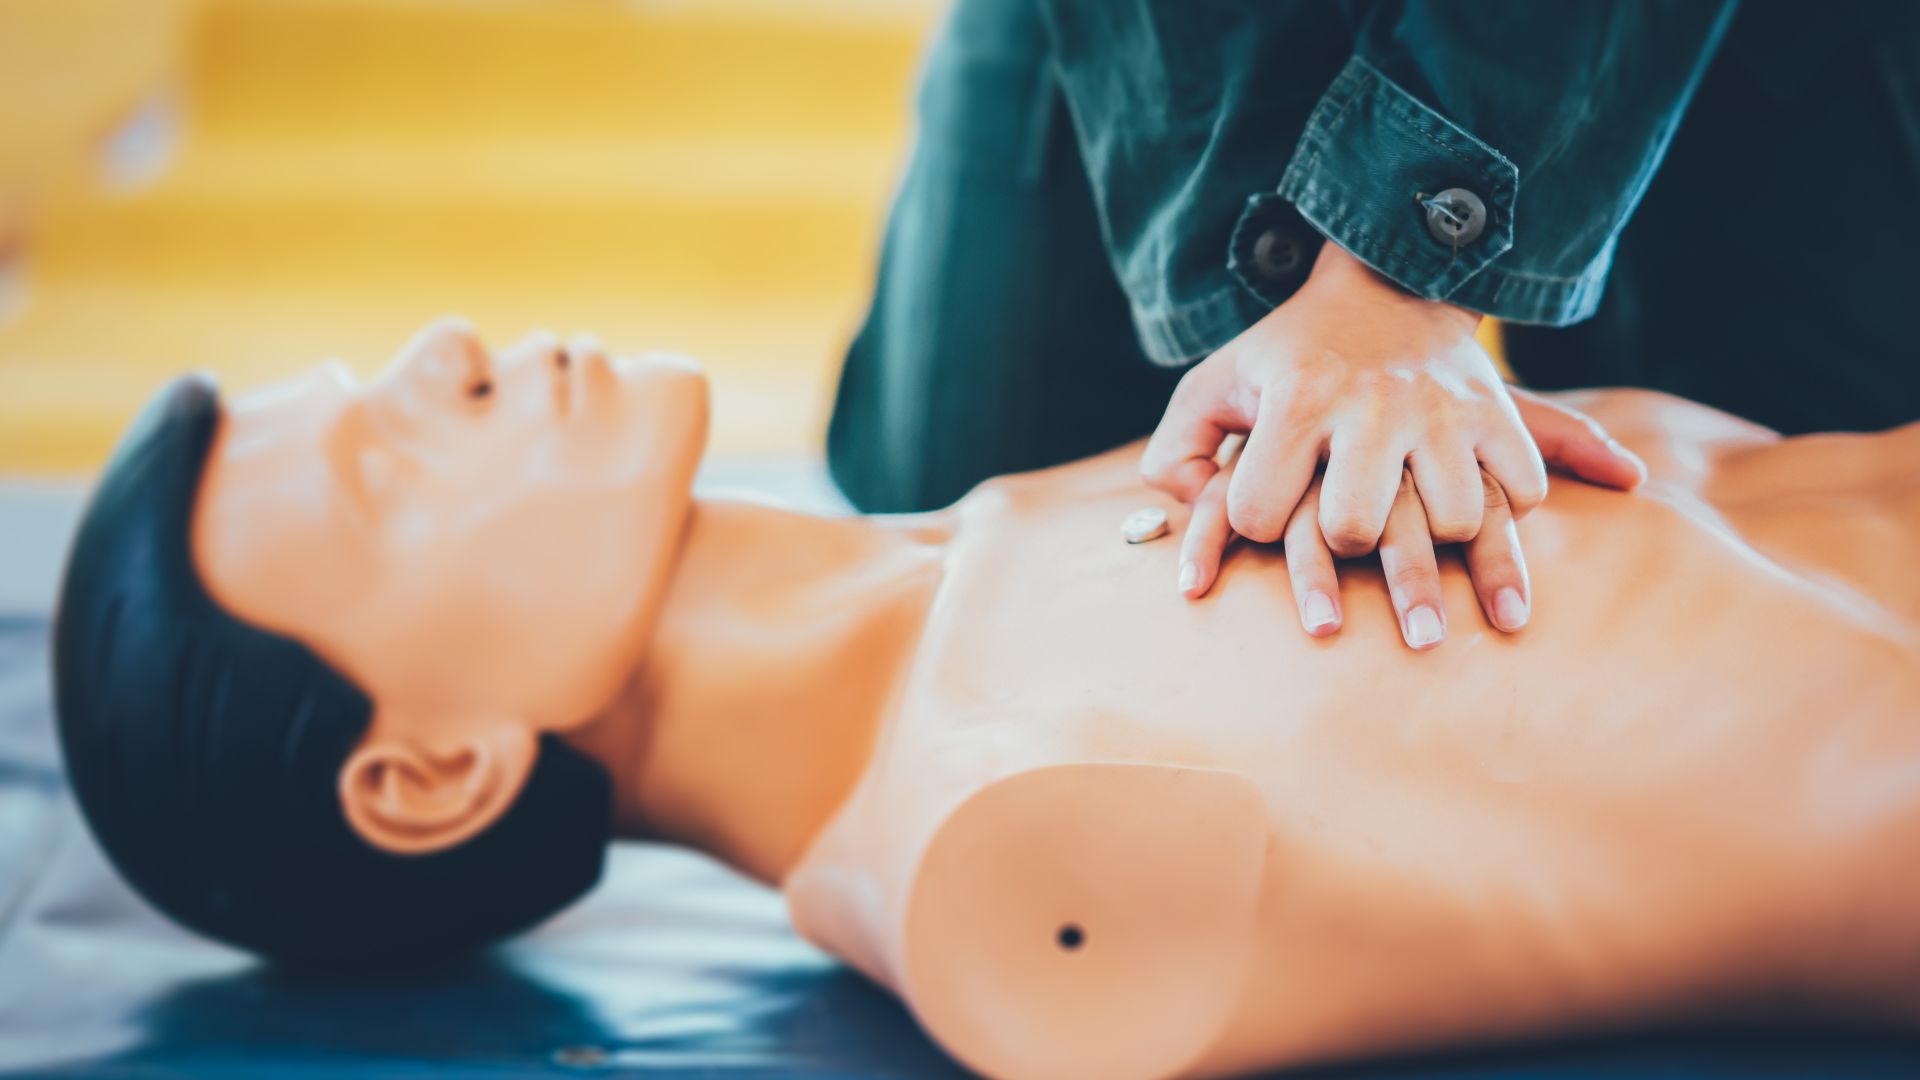 Can you preform CPR on a gunshot victim?